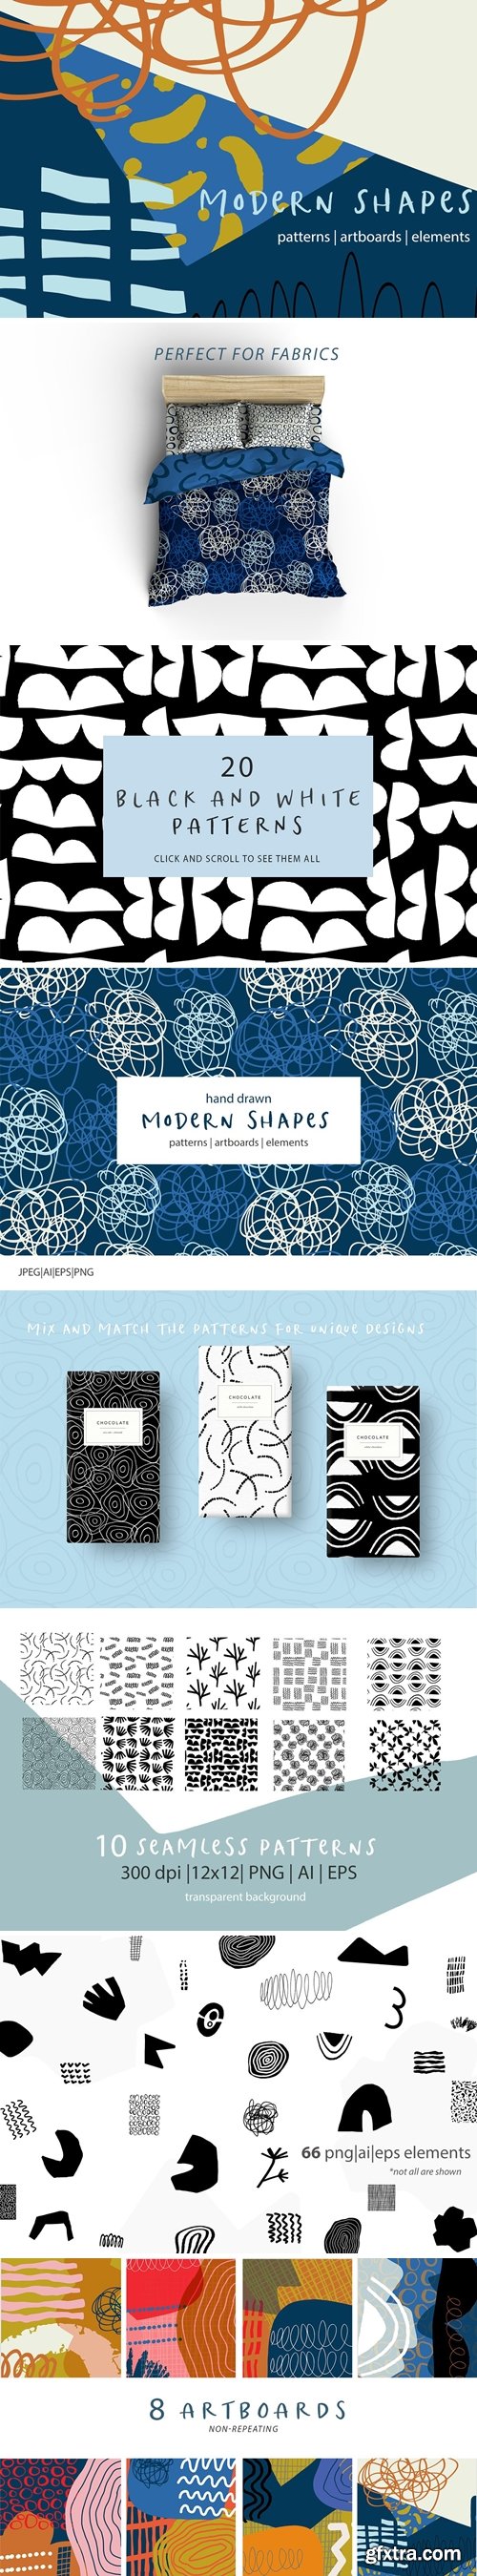 CM - Modern Shapes Patterns & Artboards 3529308